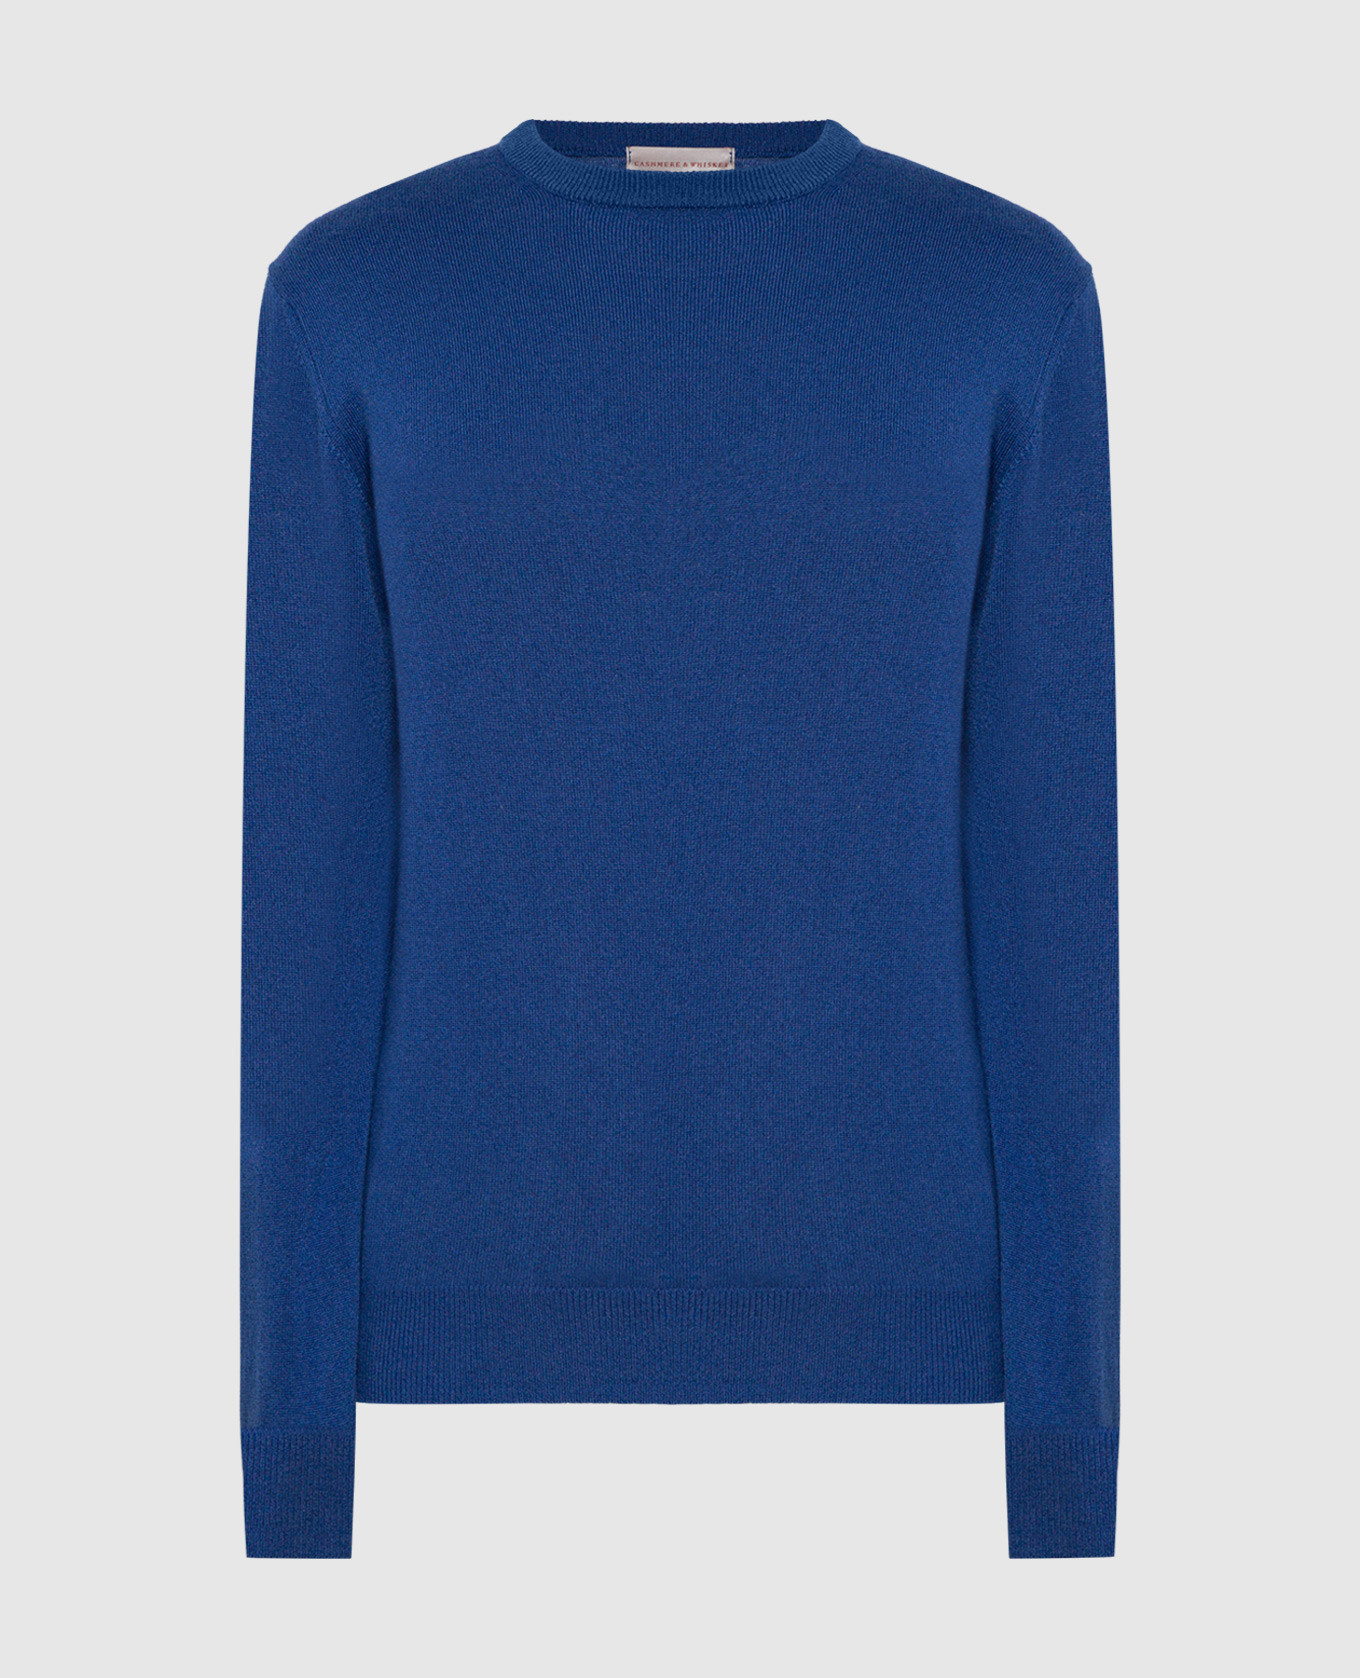 Blue cashmere jumper